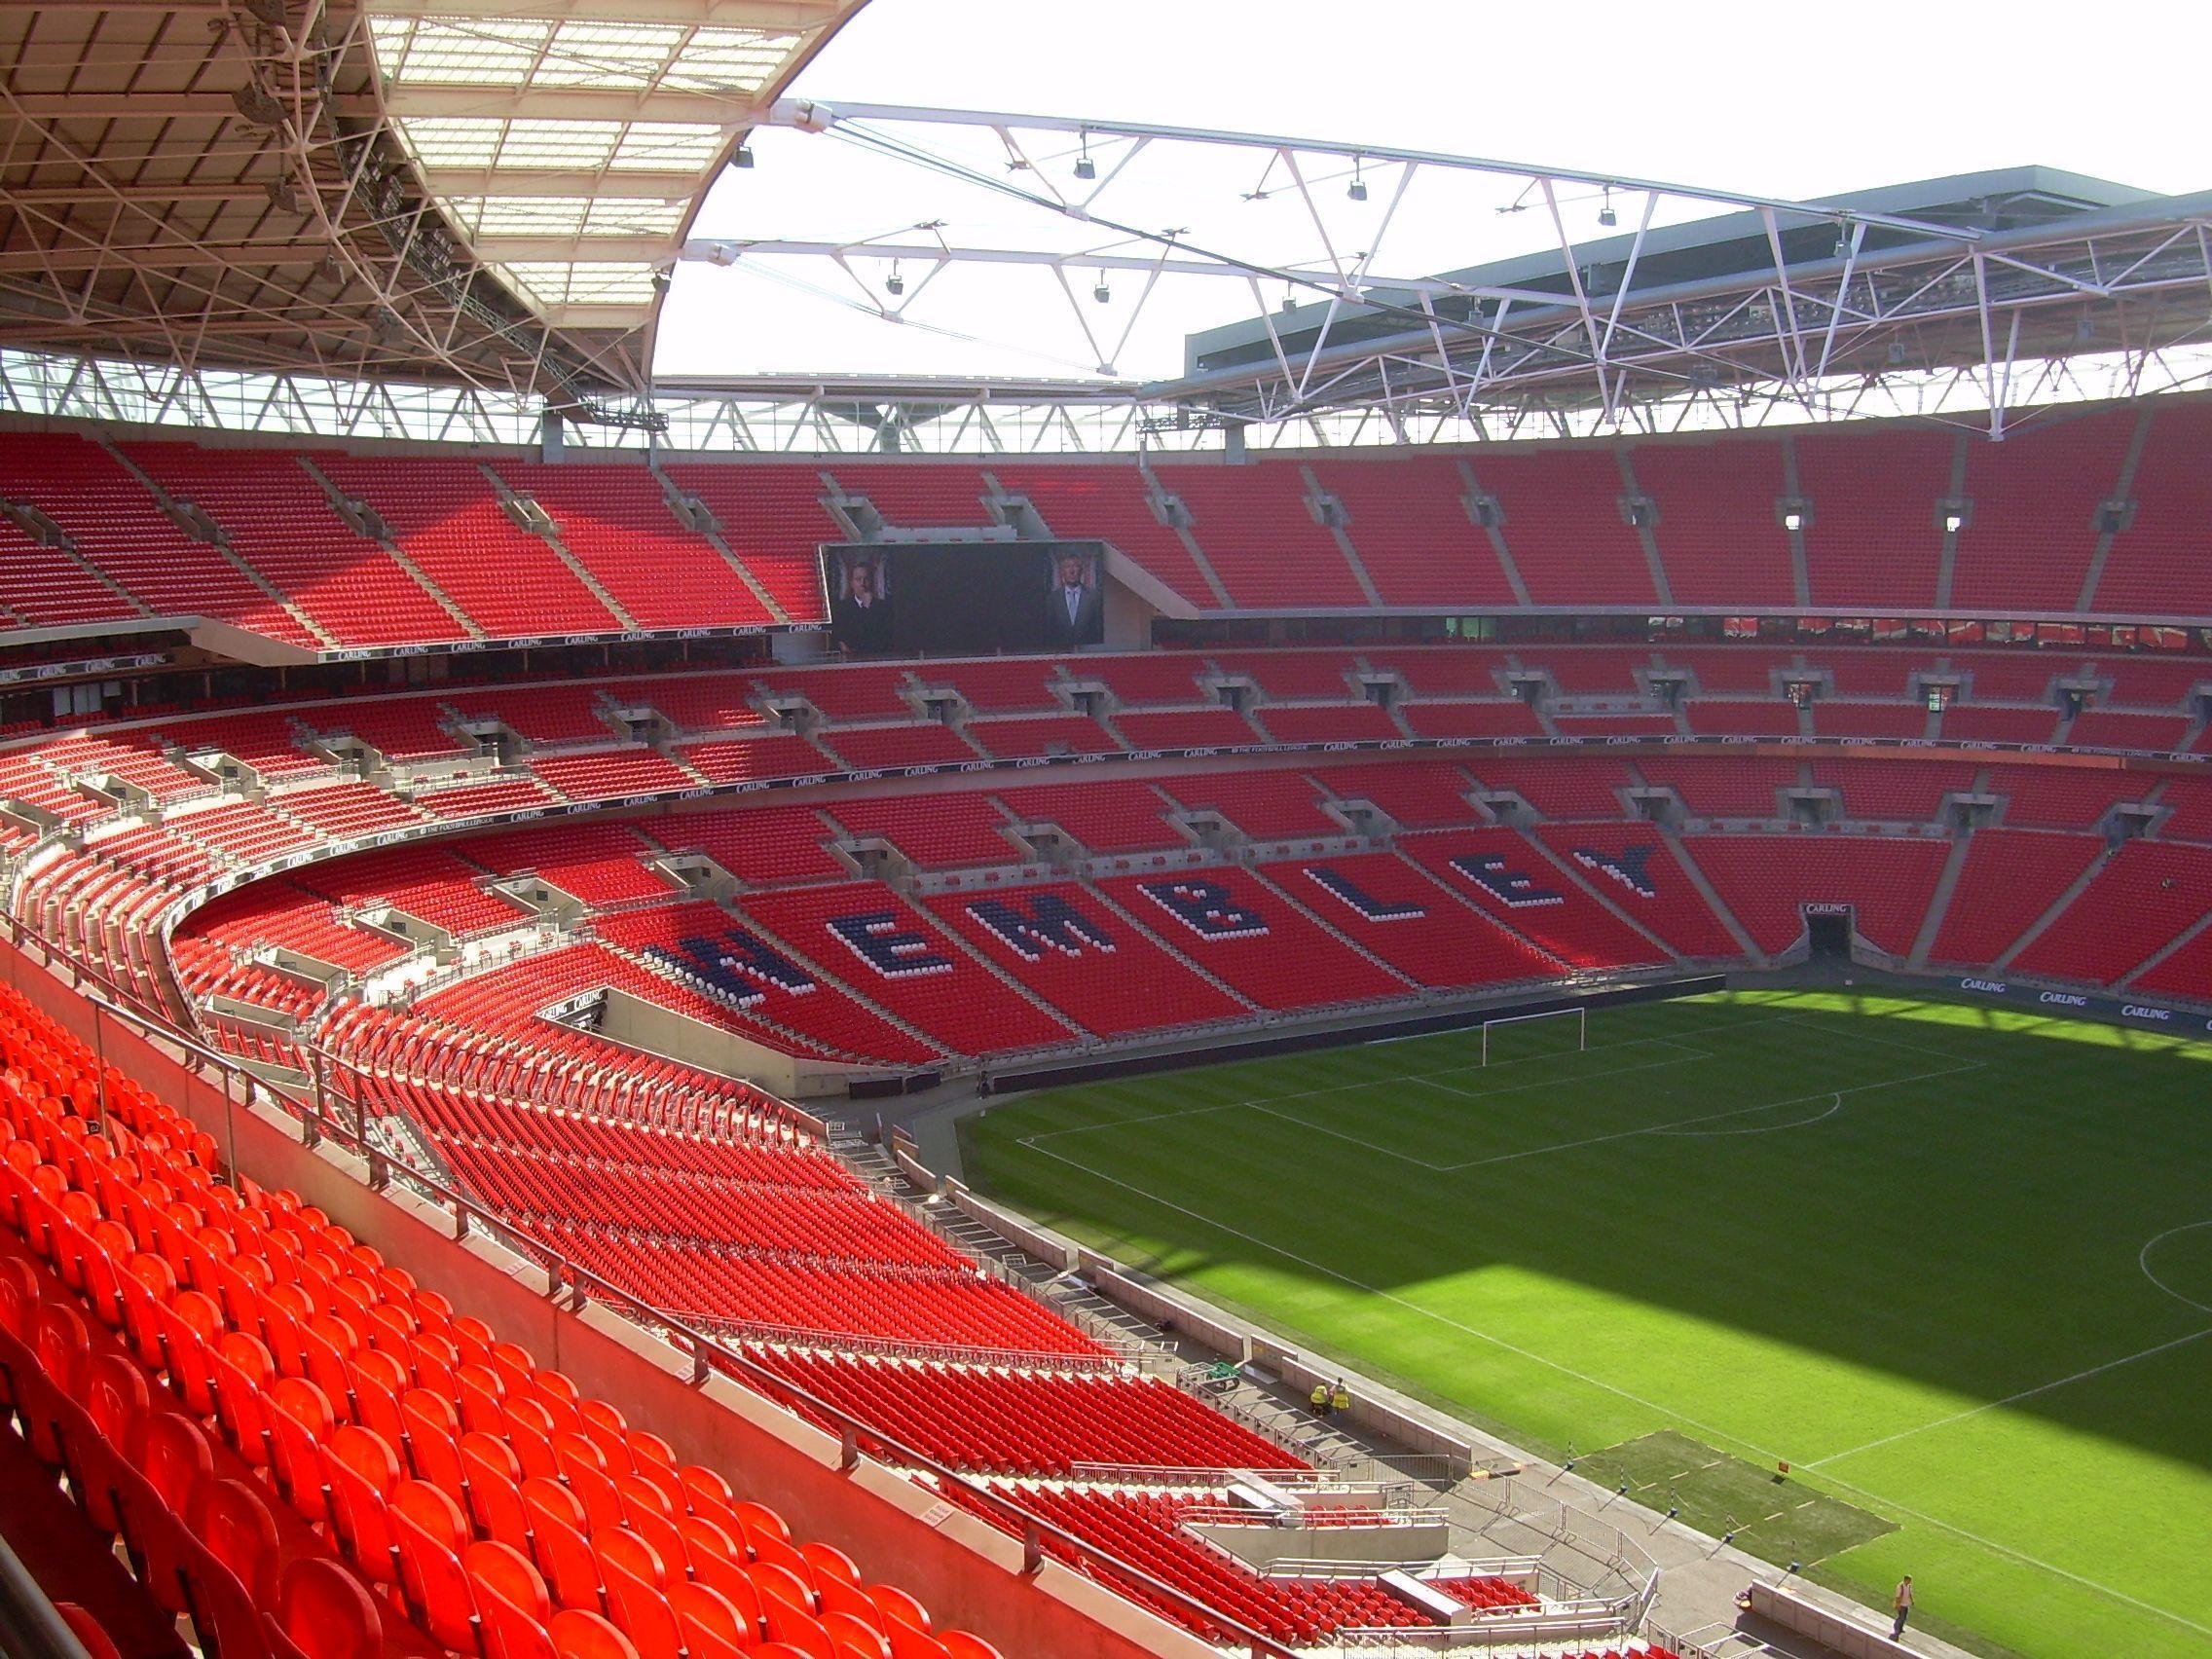 London Wembley Stadium